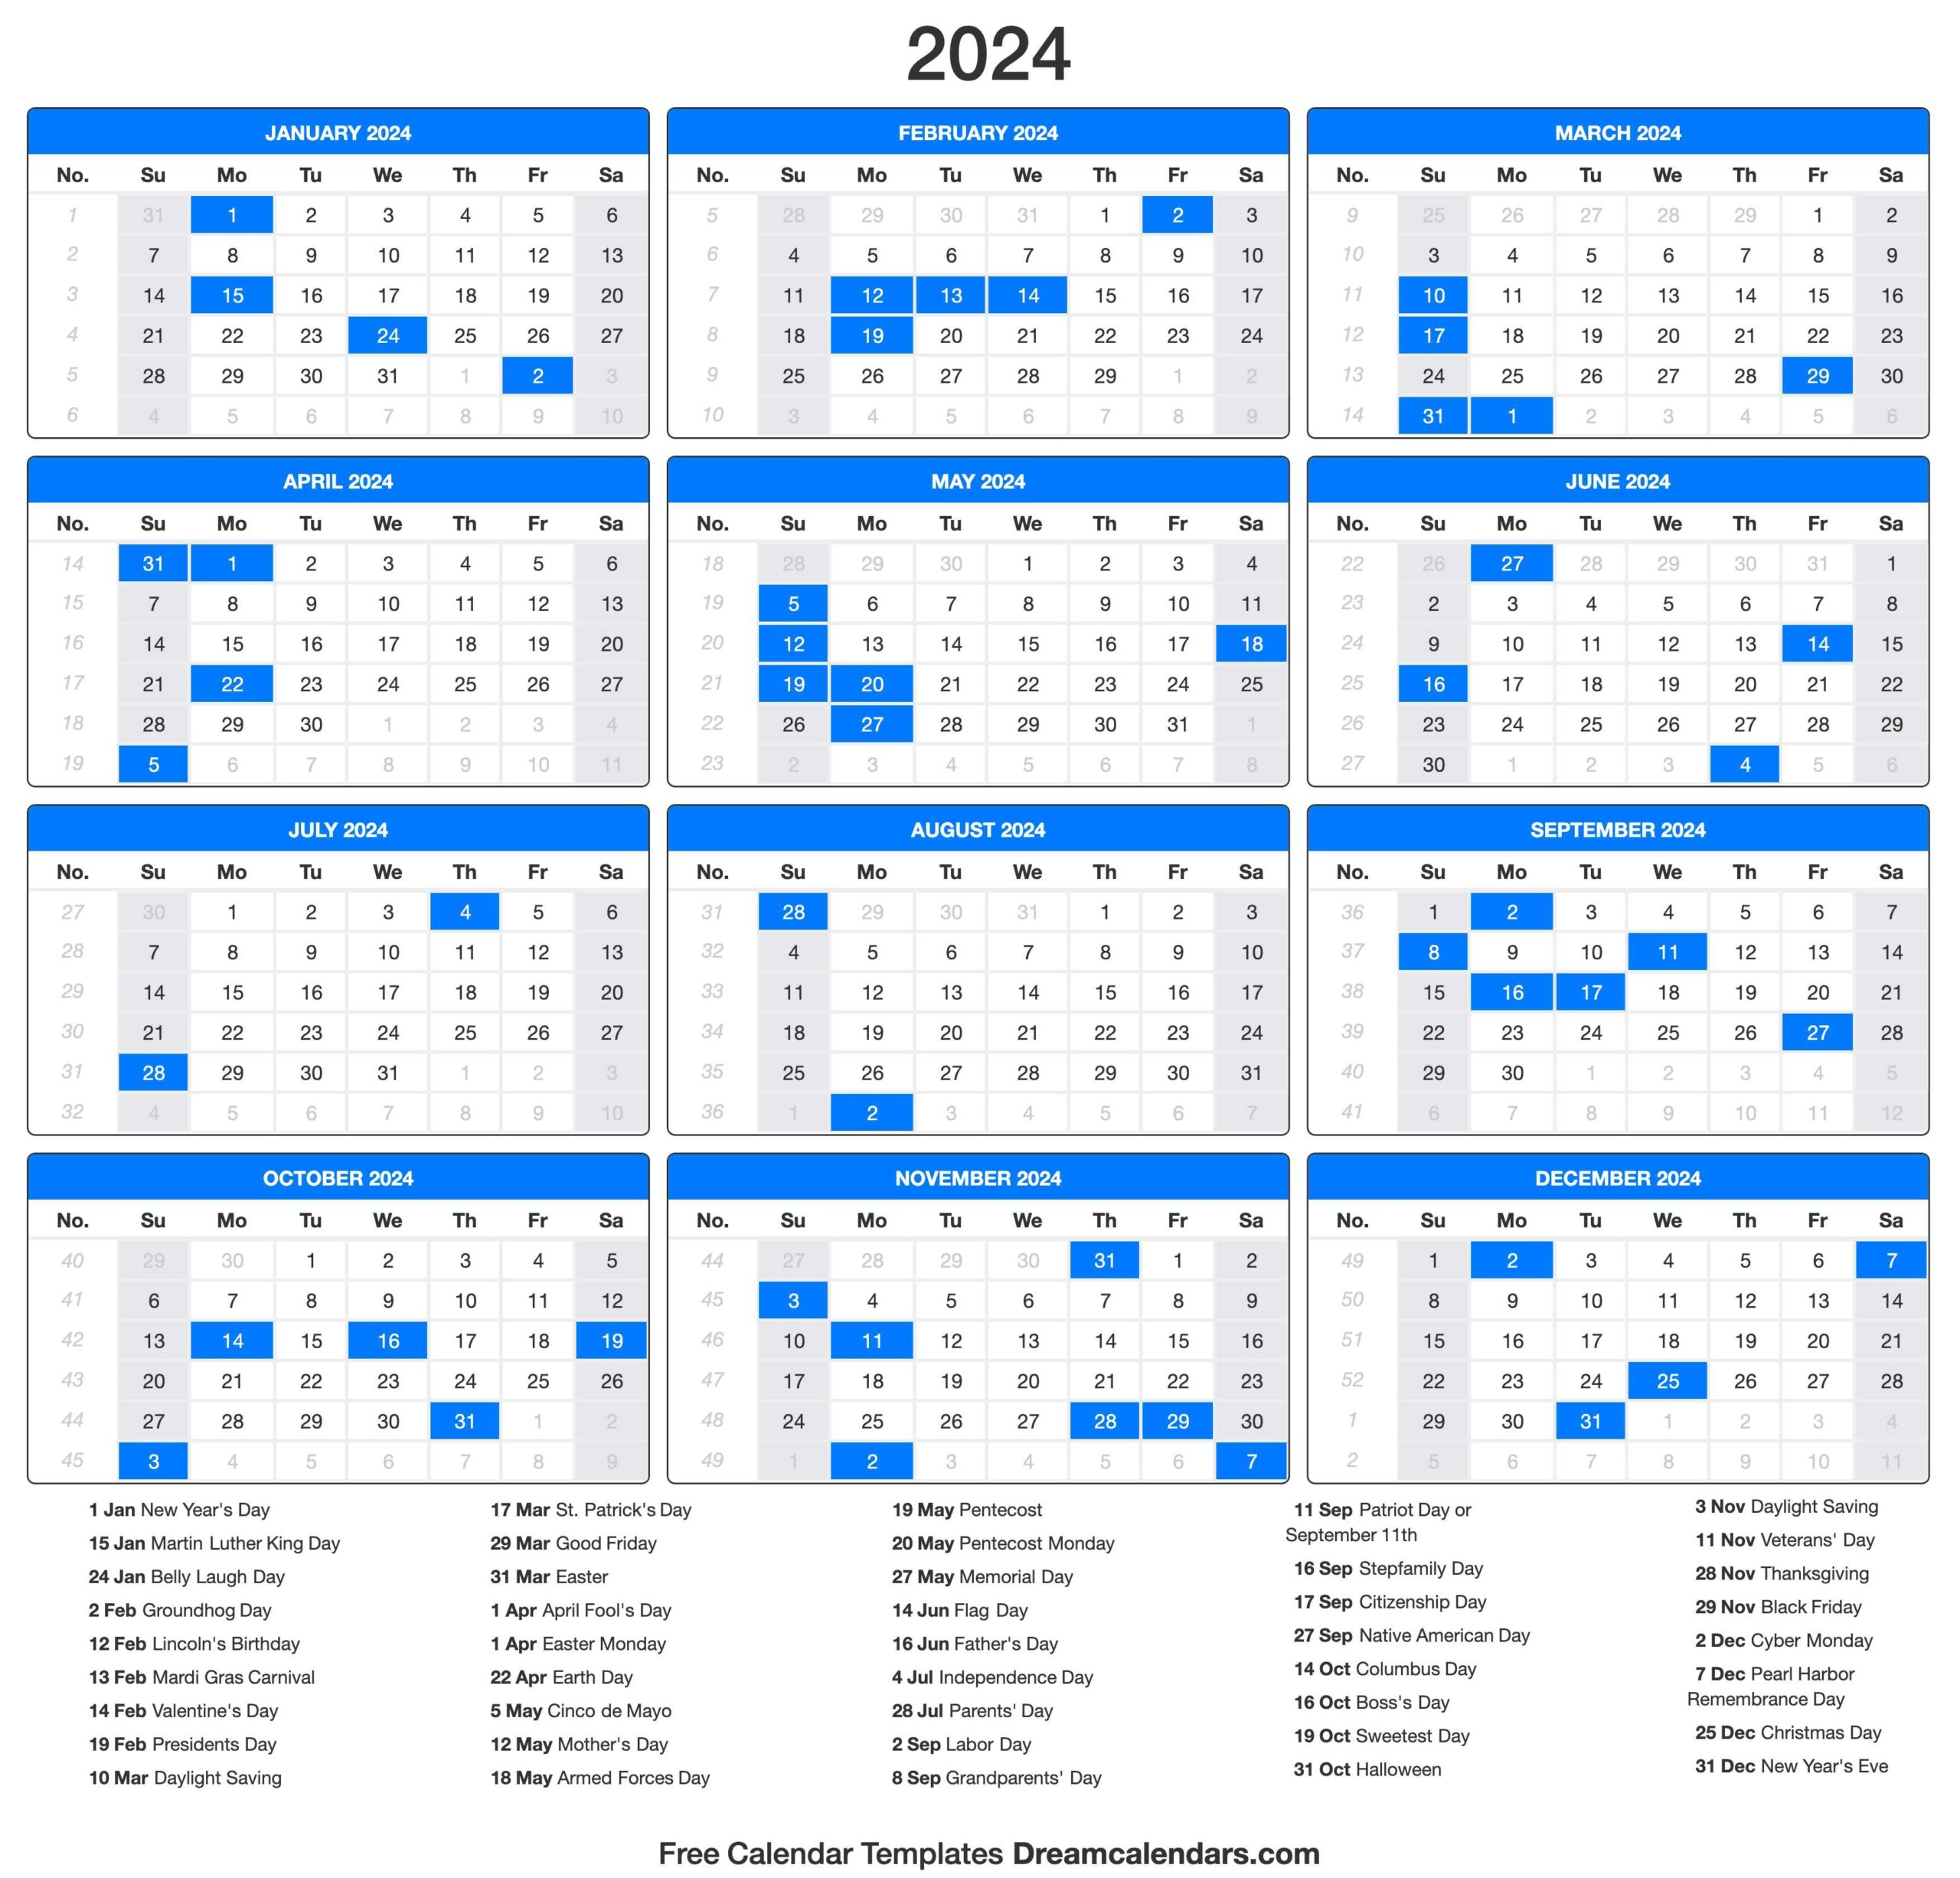 2024 Calendar - Free Printable 2024 Calendar With Holidays And Observances